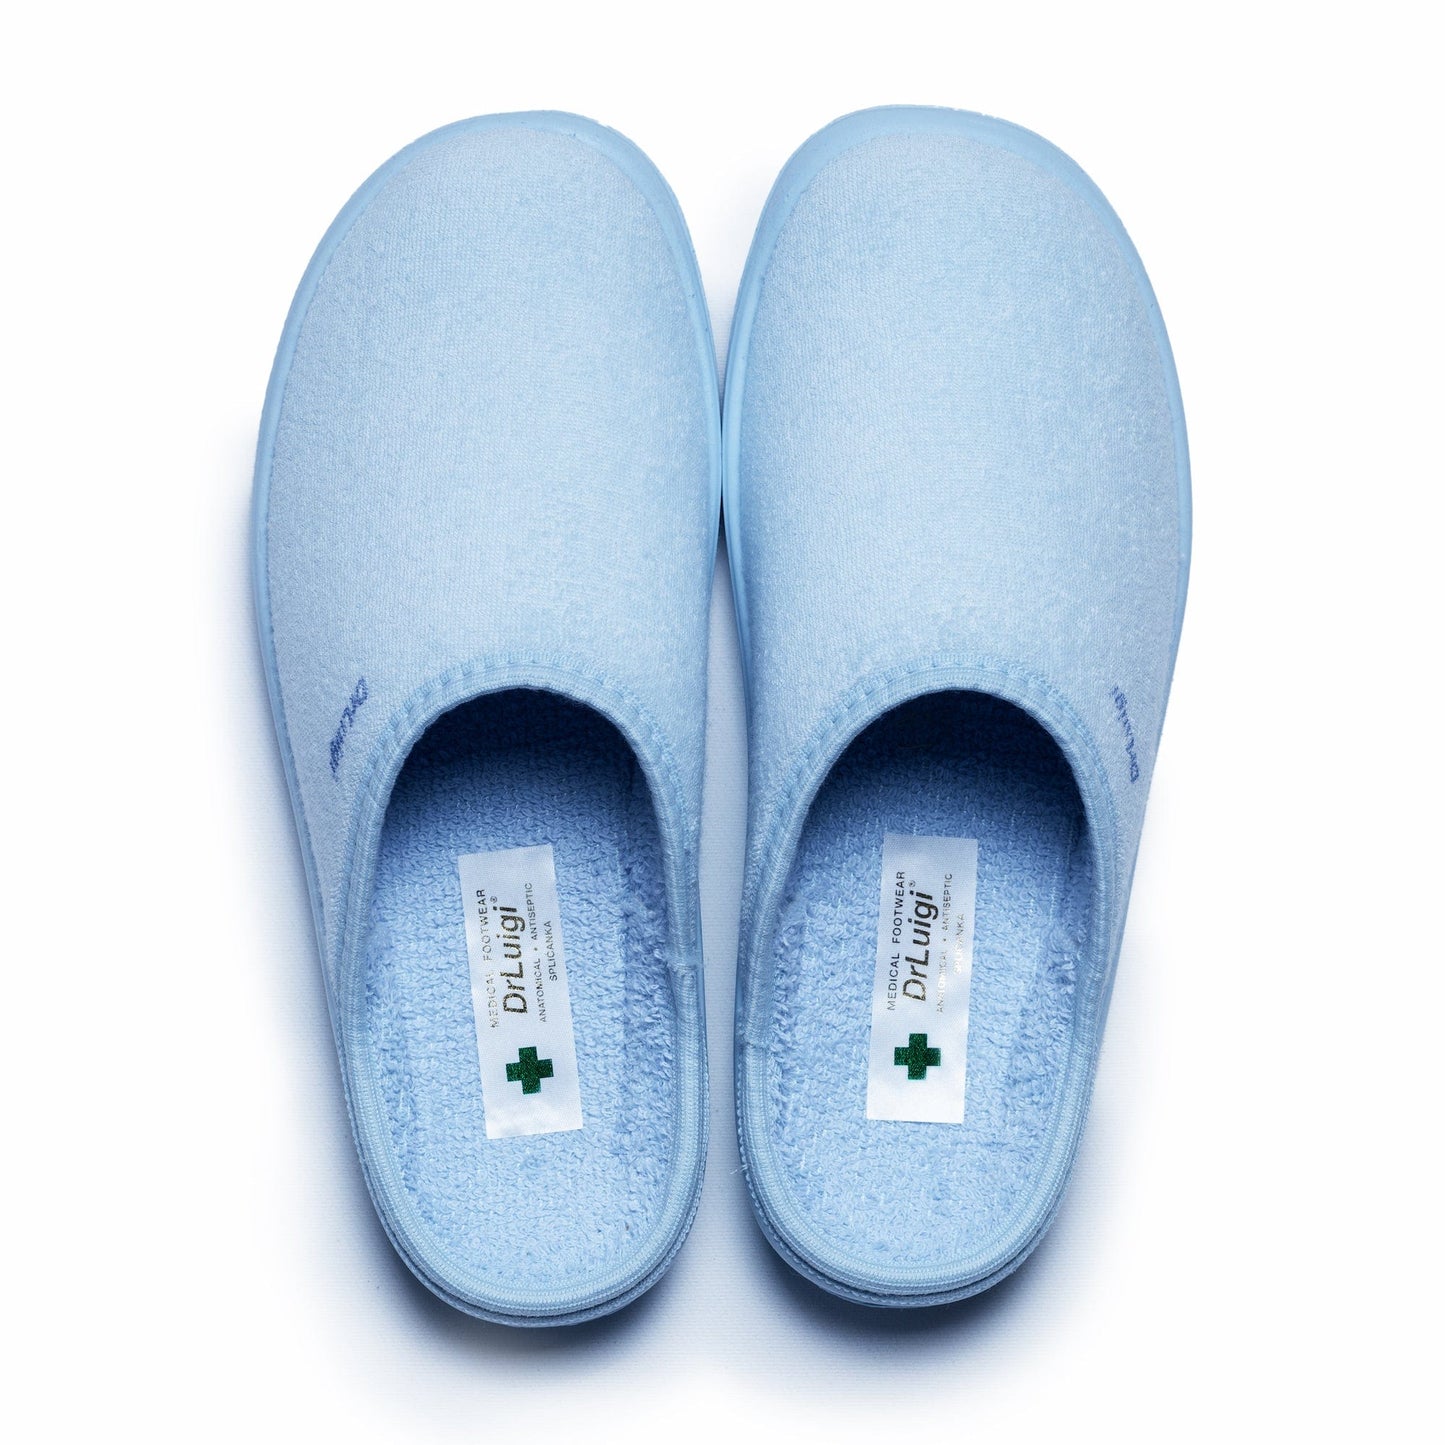 DRLUIGI MEDICAL FOOTWEAR FOR MEN PU-01-01-TF - BABY BLUE